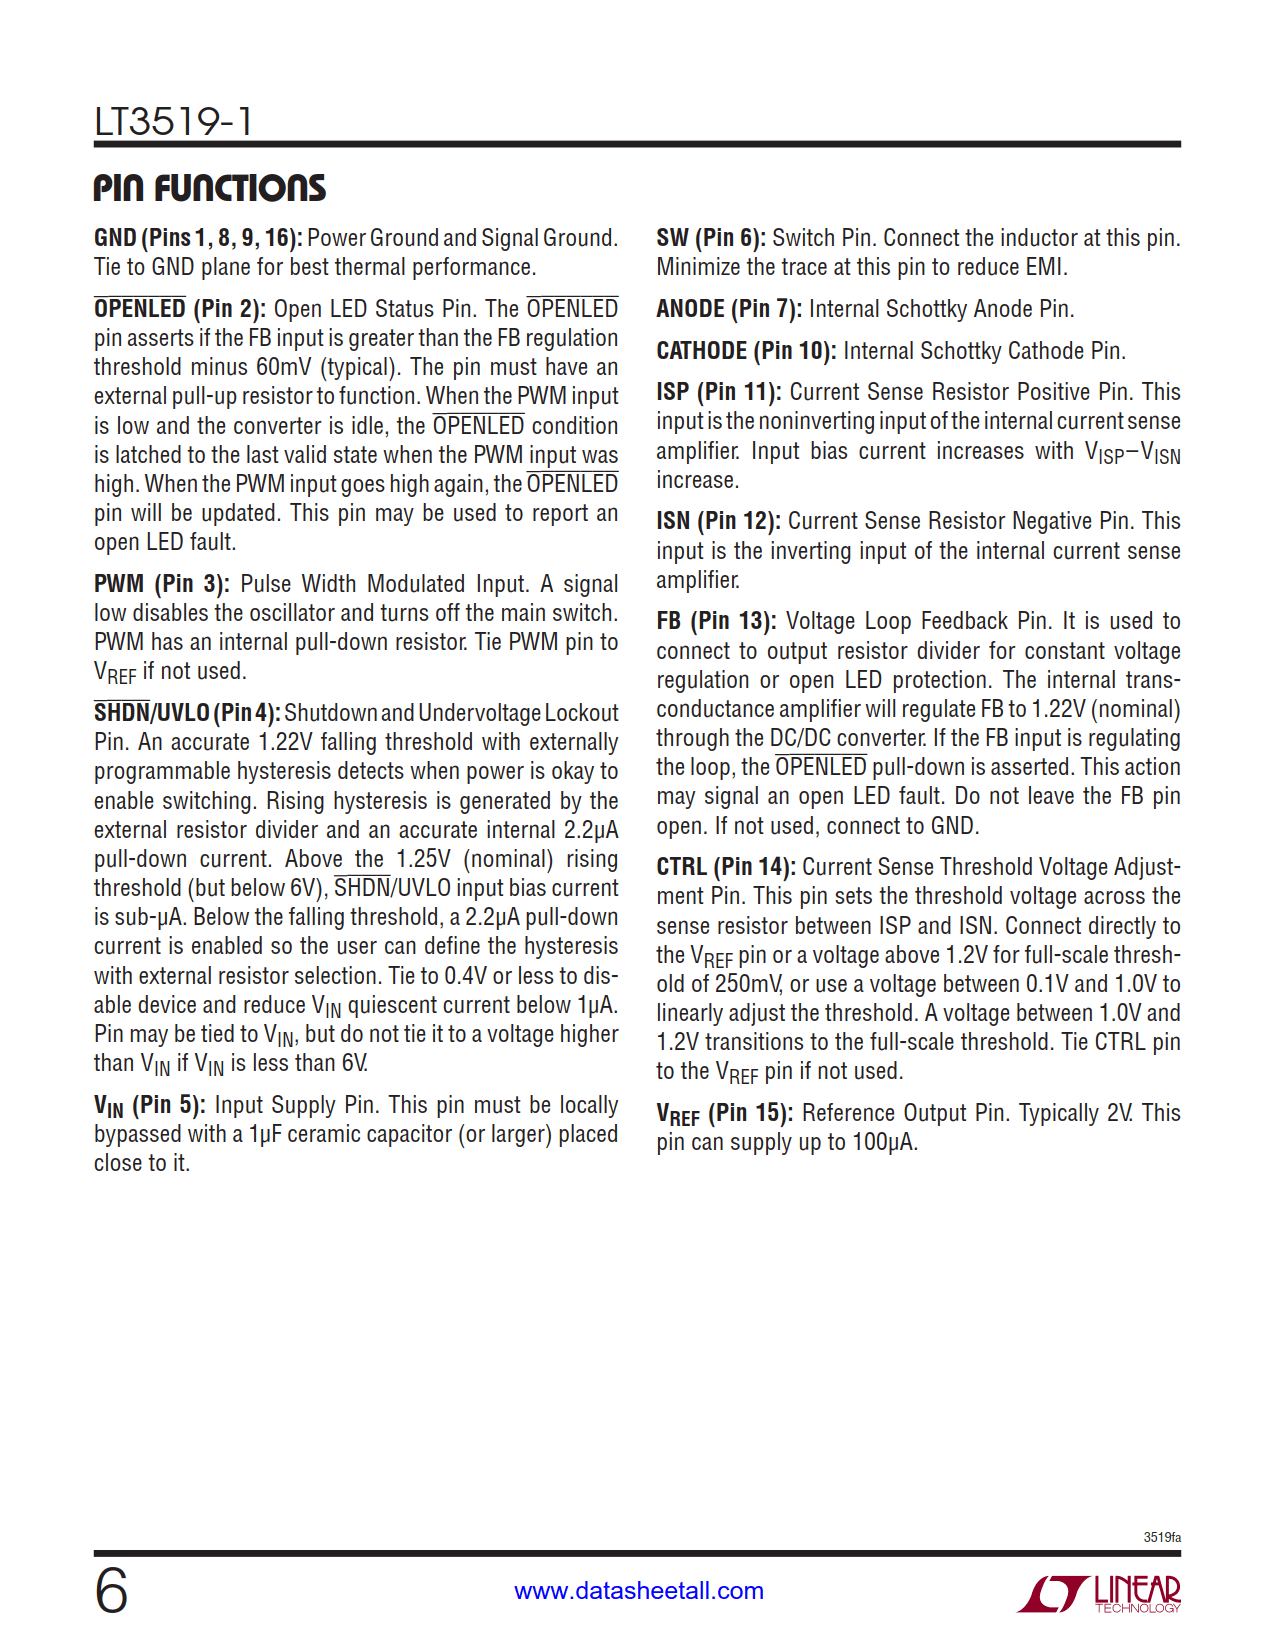 LT3519-1 Datasheet Page 6